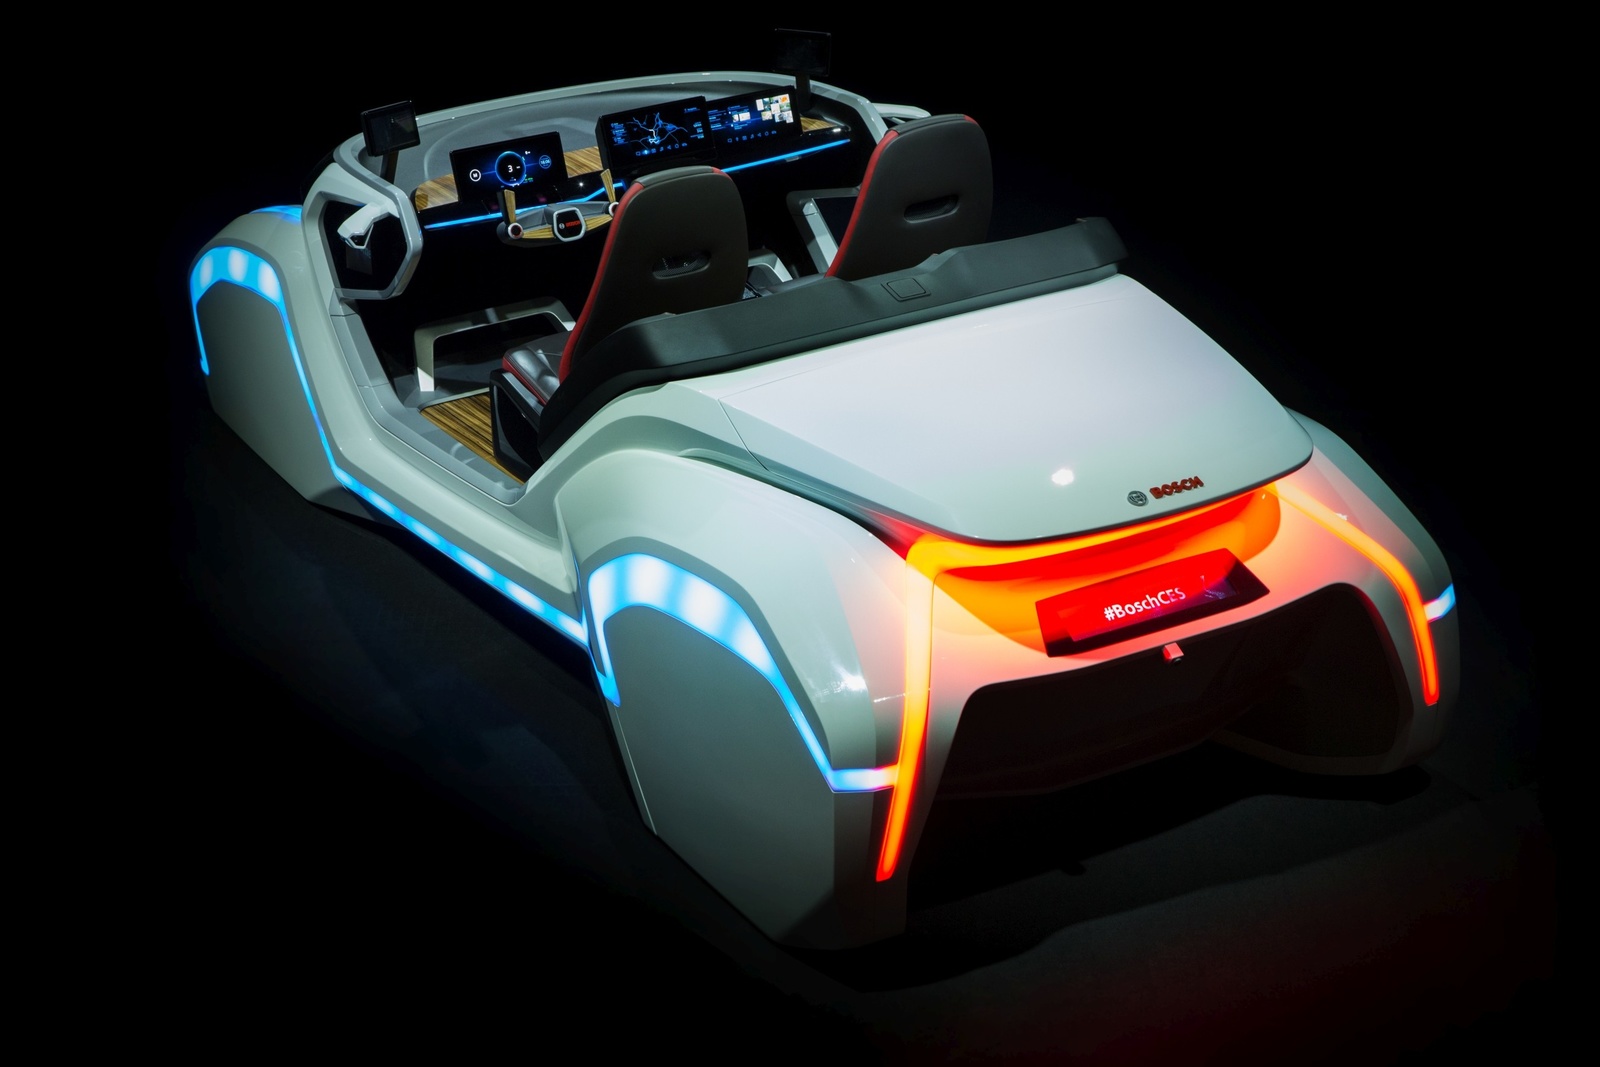 Bosch concept car at CES 2017